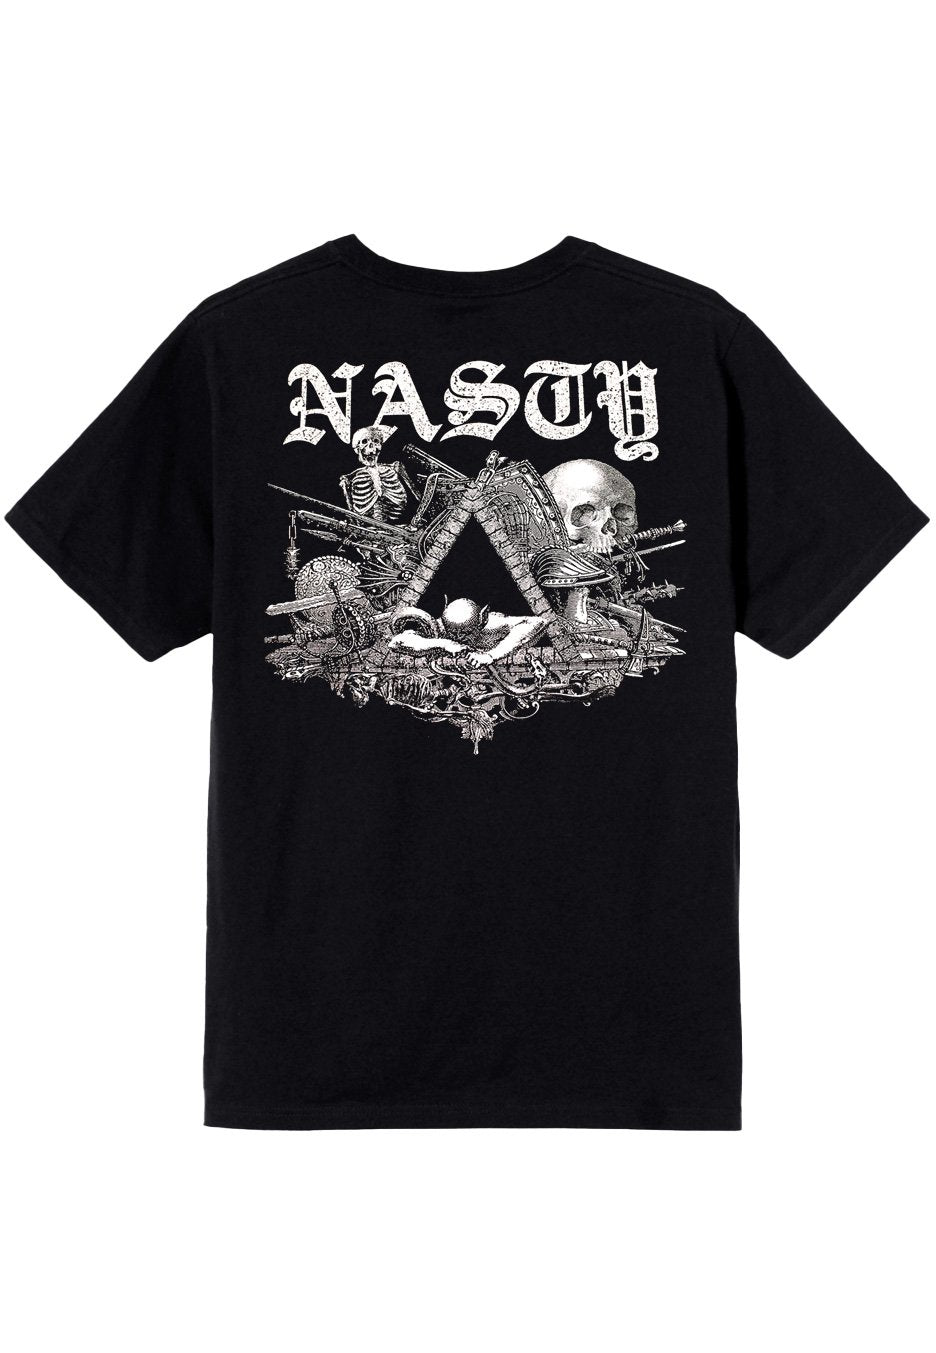 Nasty - Devil Snake - T-Shirt